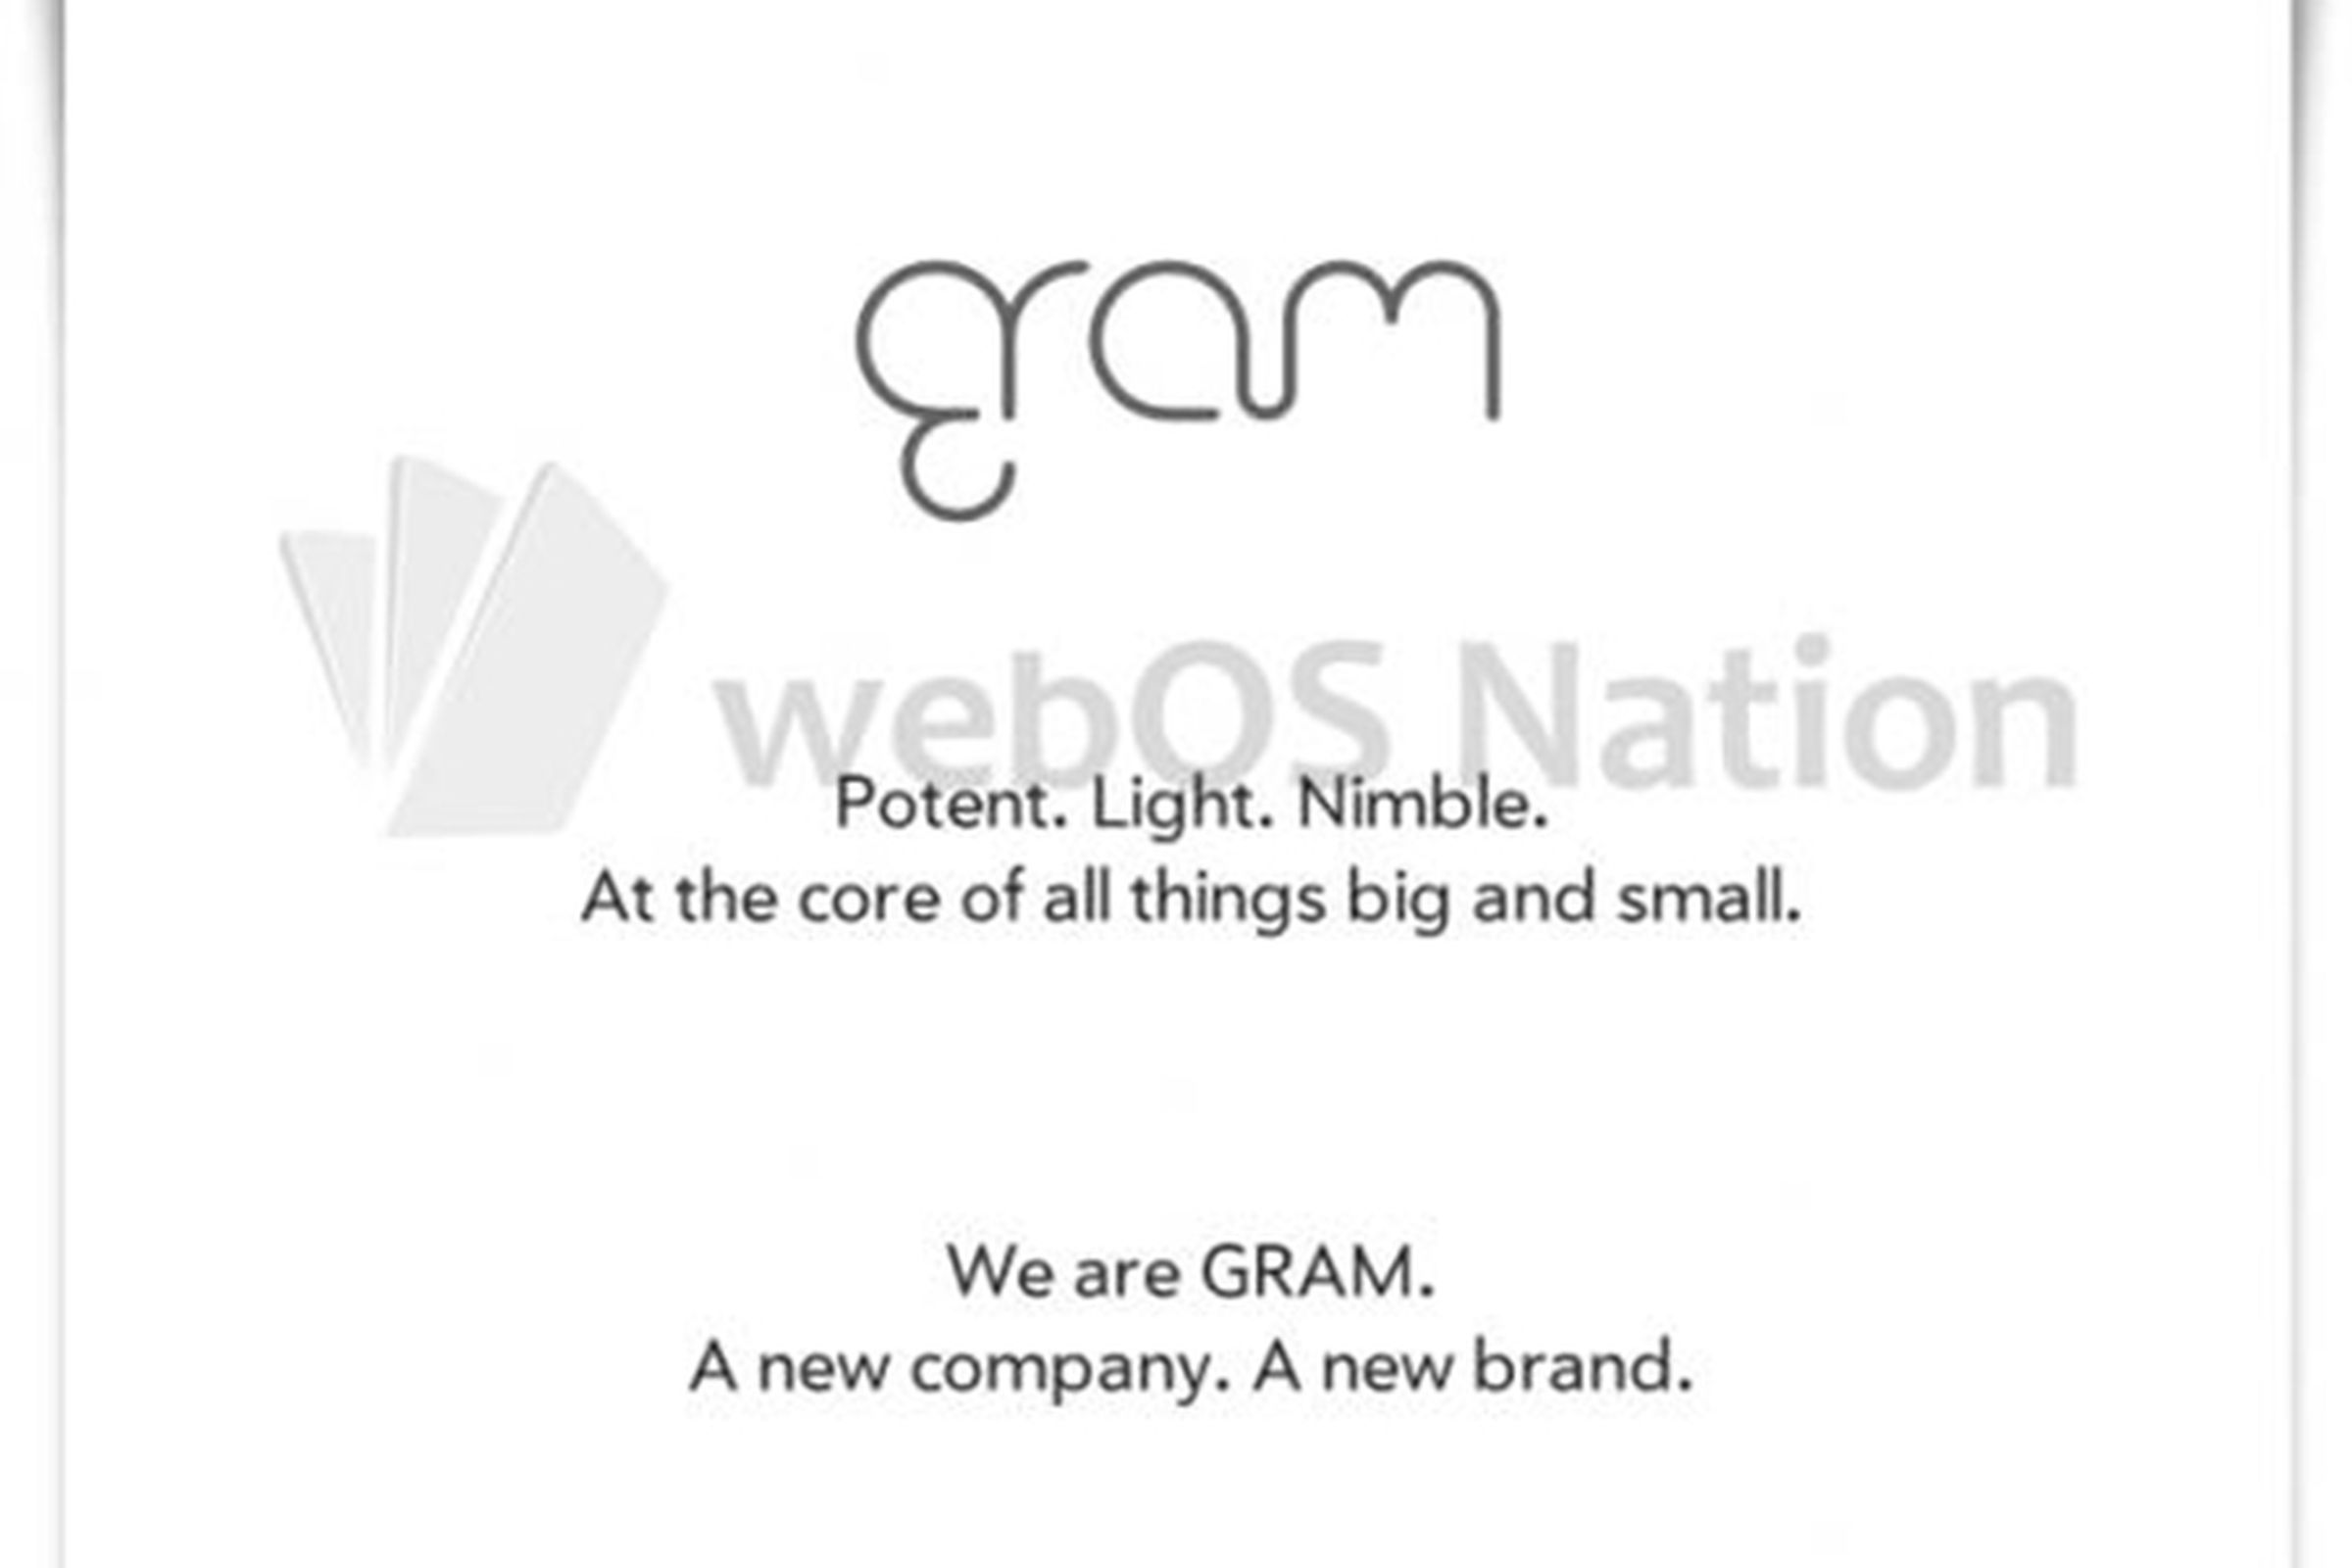 gram logo (webos nation)